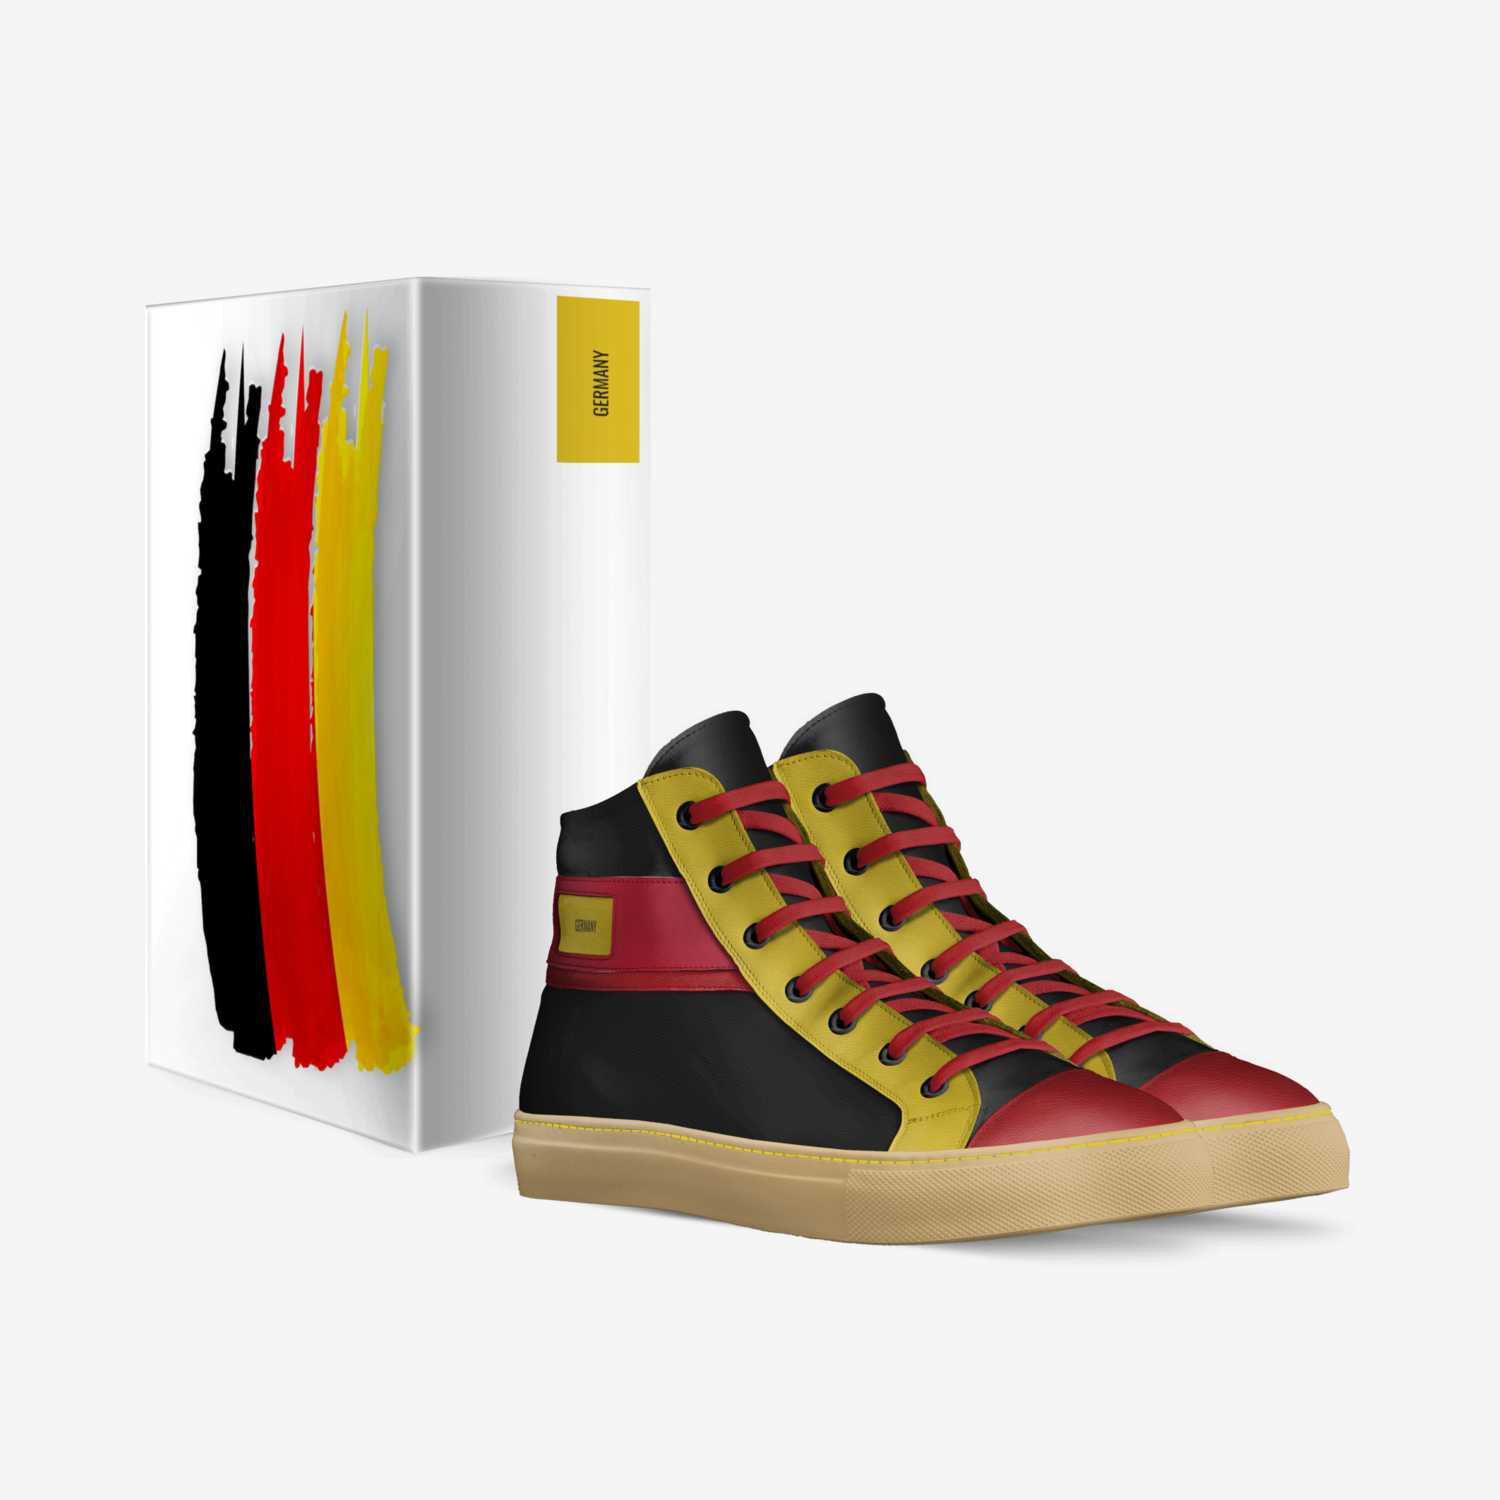 Drenckhahn custom made in Italy shoes by Drenckhahn | Box view